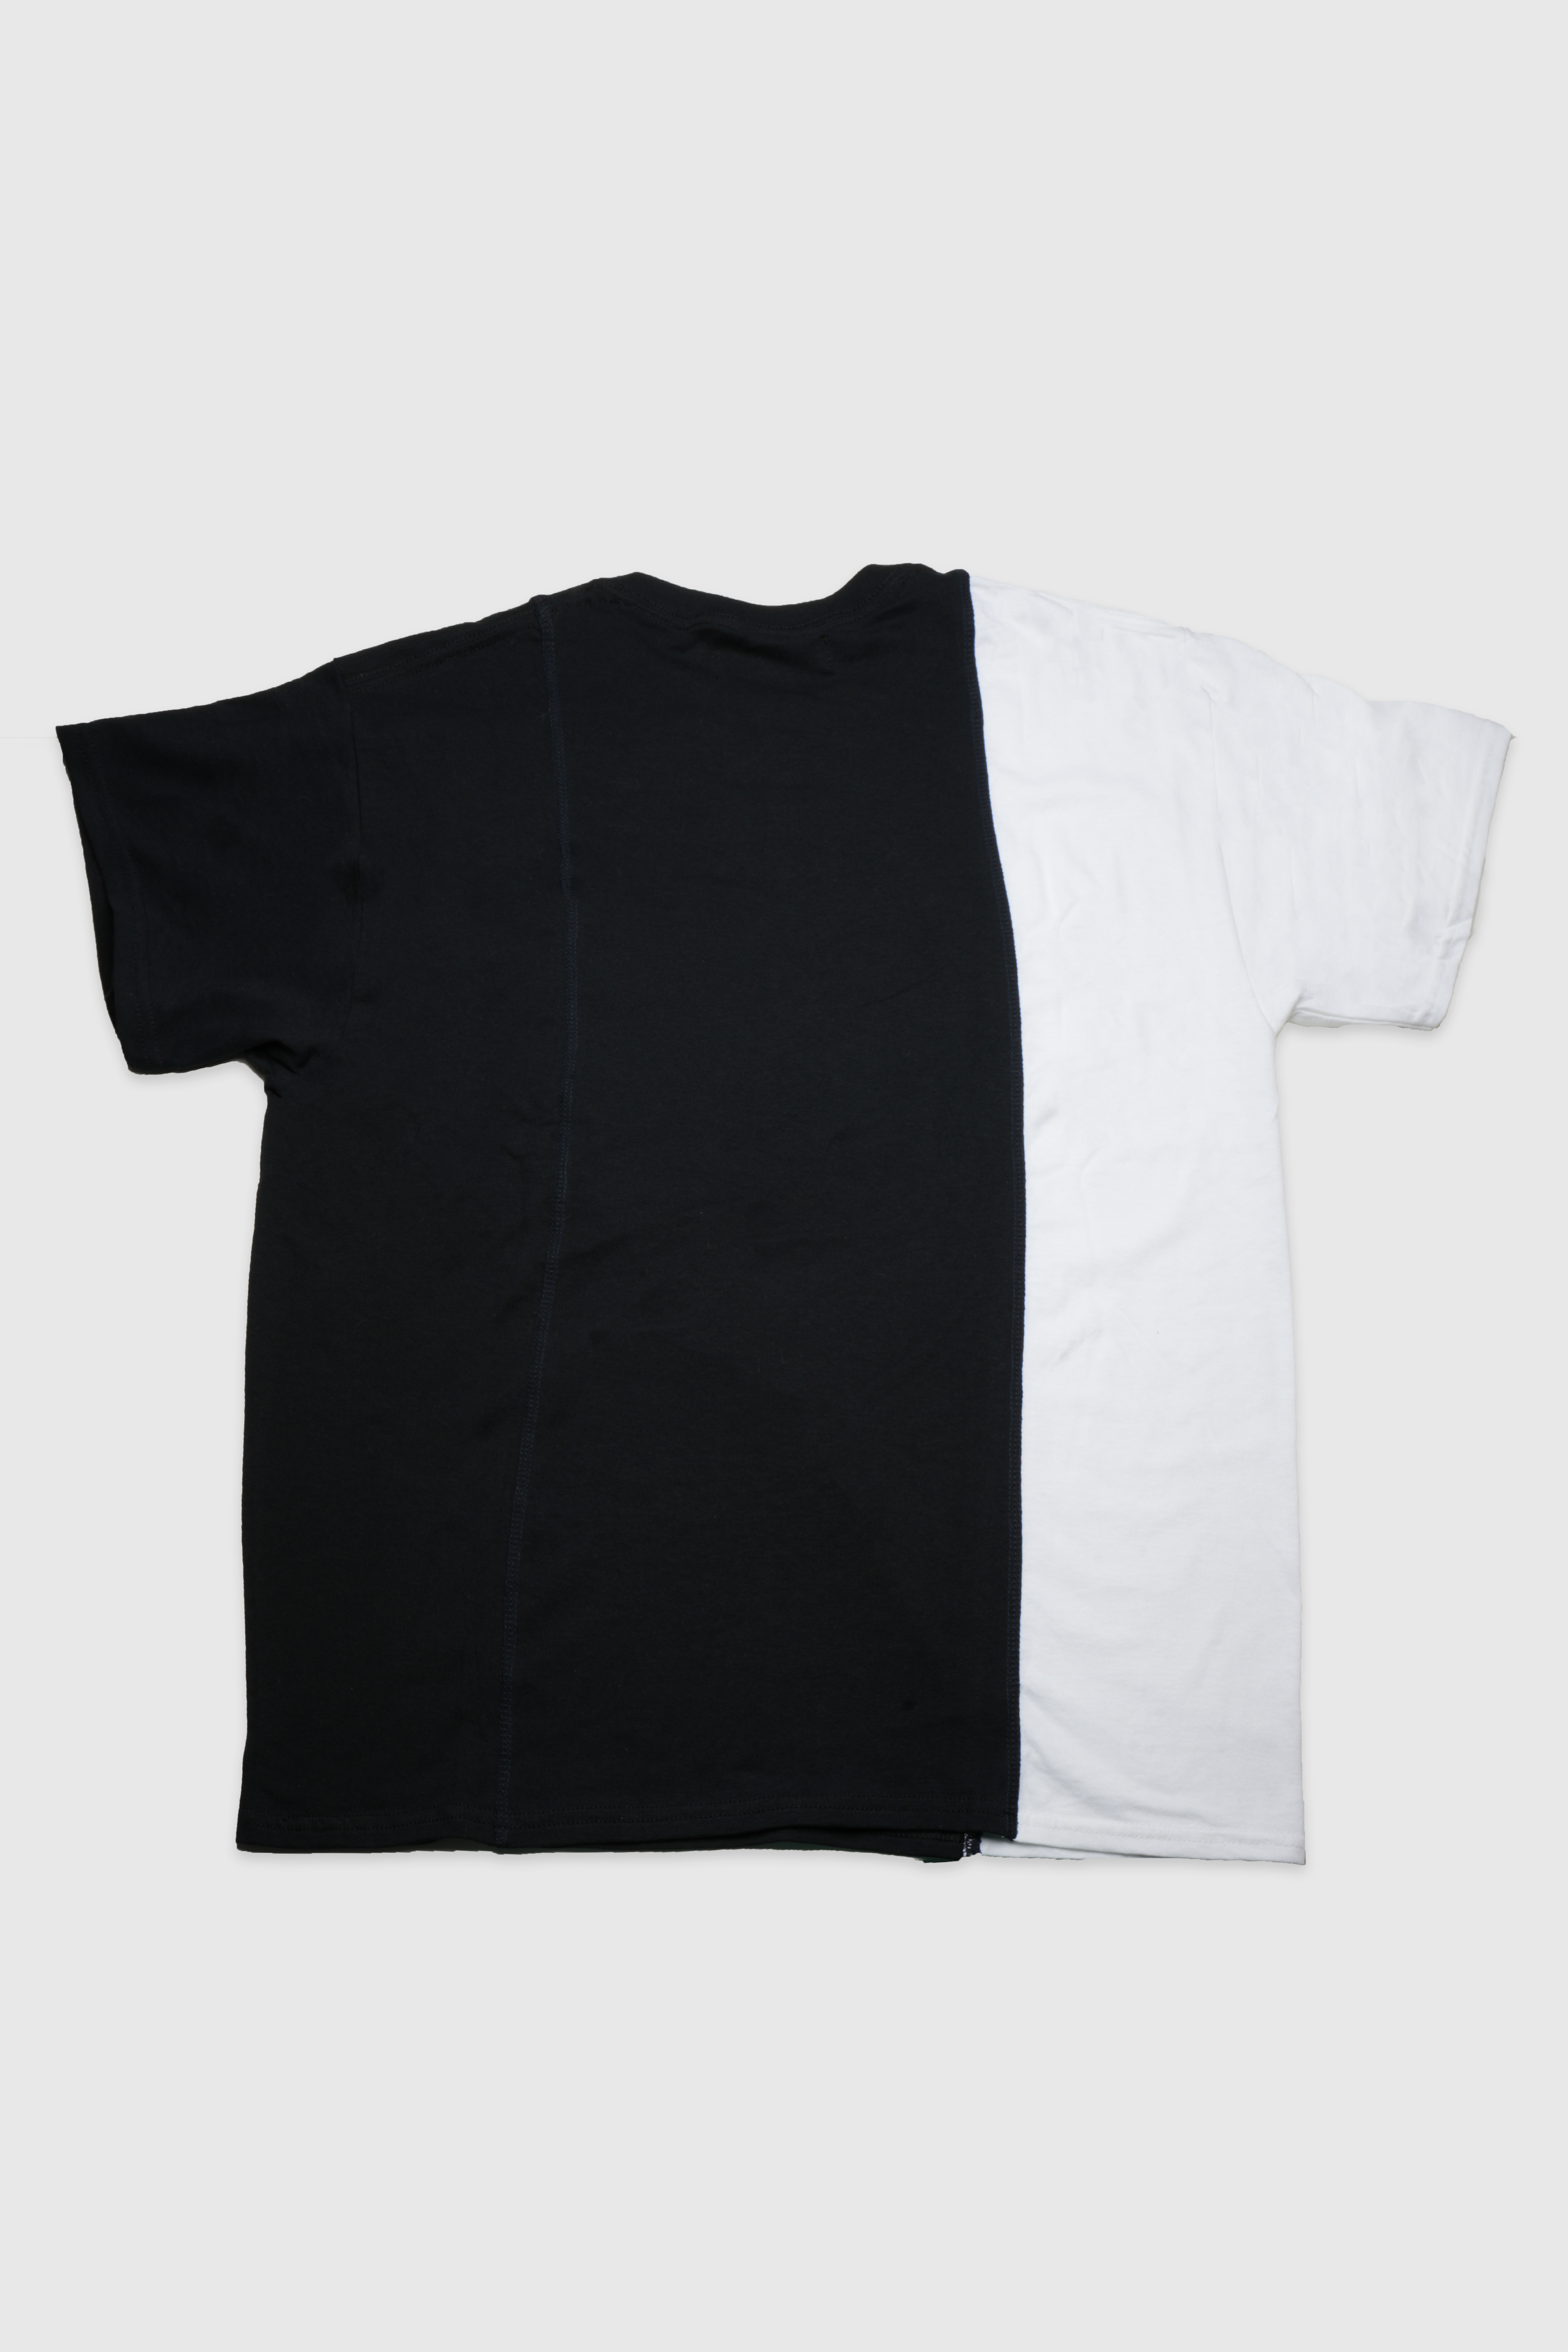 Selectshop FRAME - DREAMLAND SYNDICATE Cutup Tee XL (B) T-Shirts Concept Store Dubai